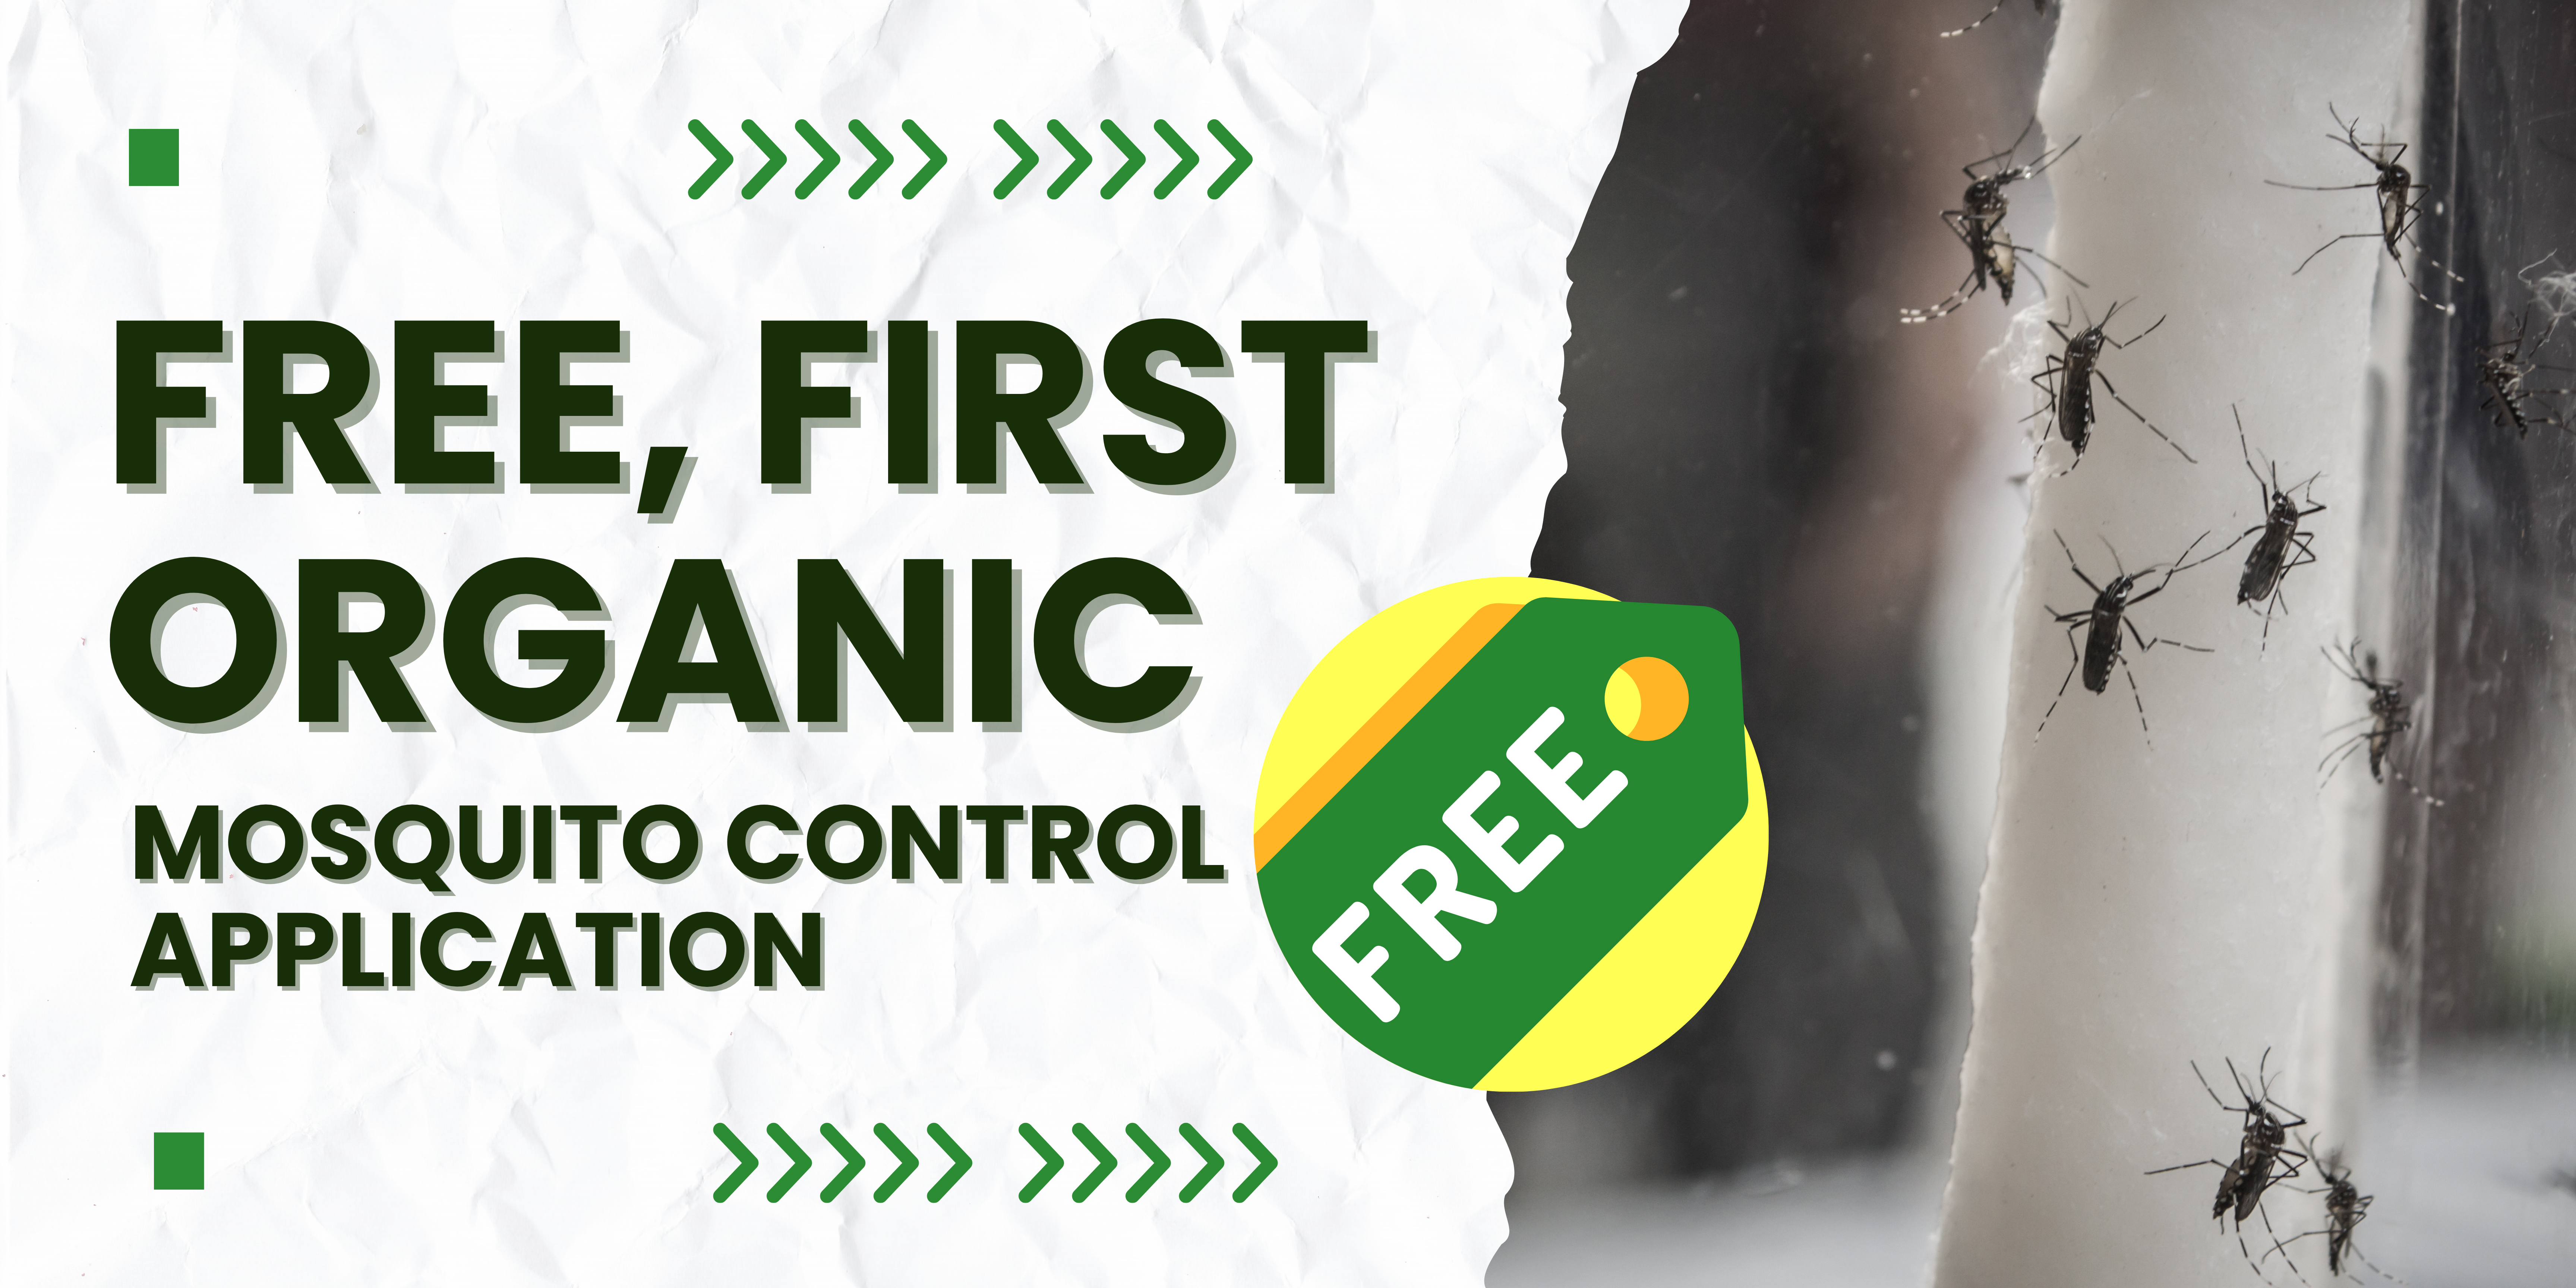 Free first organic